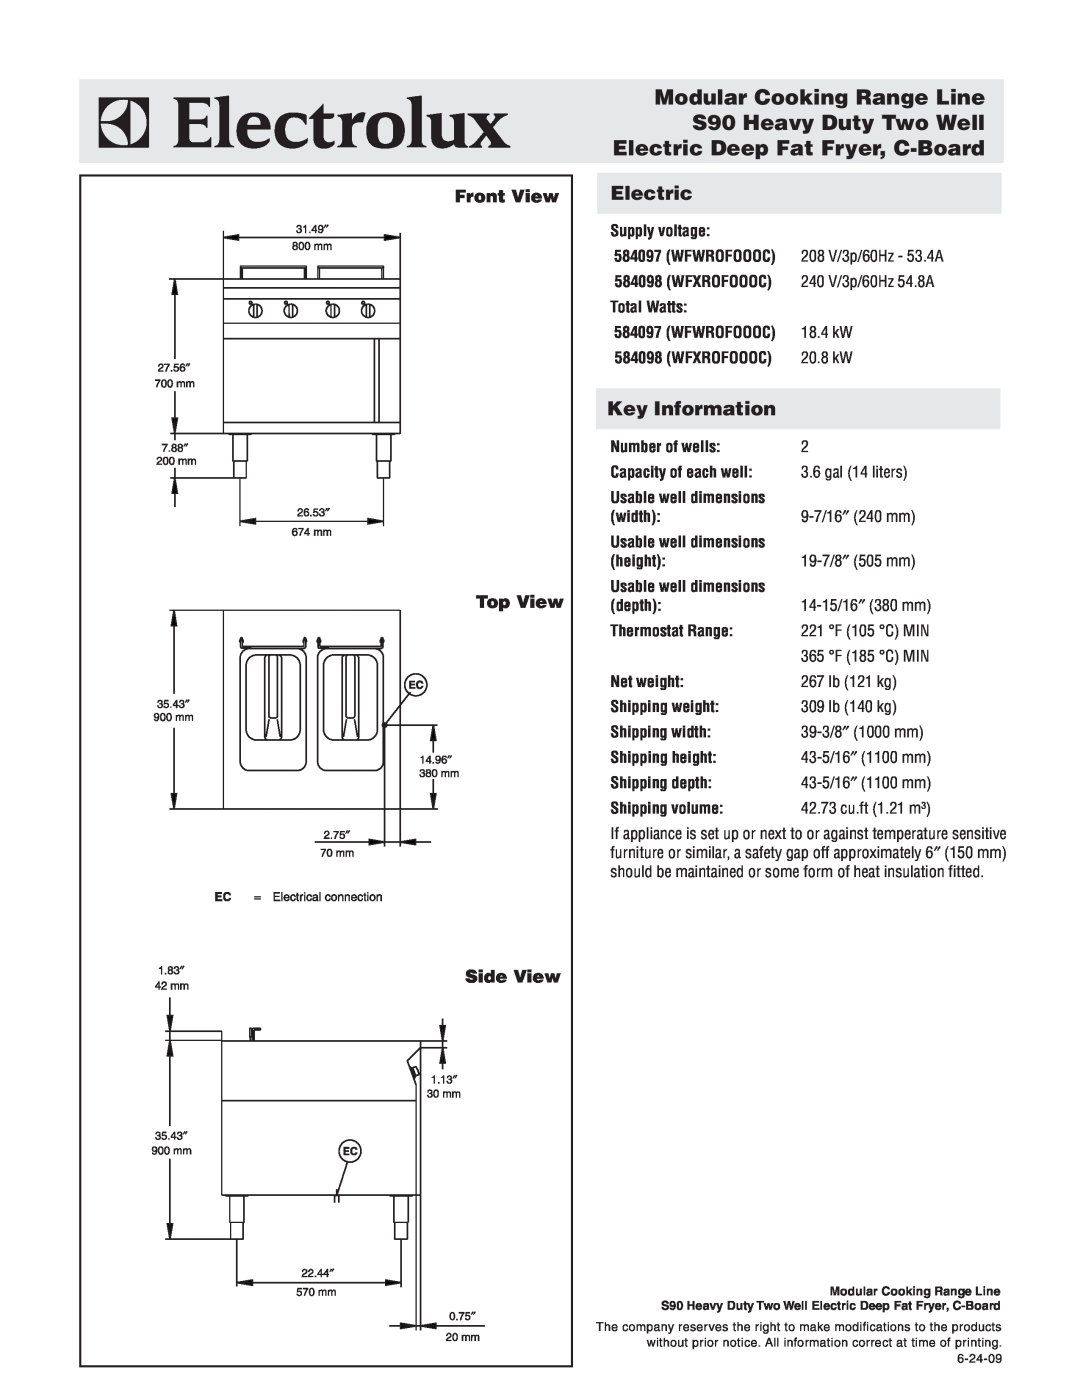 Electrolux 584097 (WFWROFOOOC) Modular Cooking Range Line S90 Heavy Duty Two Well, Electric Deep Fat Fryer, C-Board 